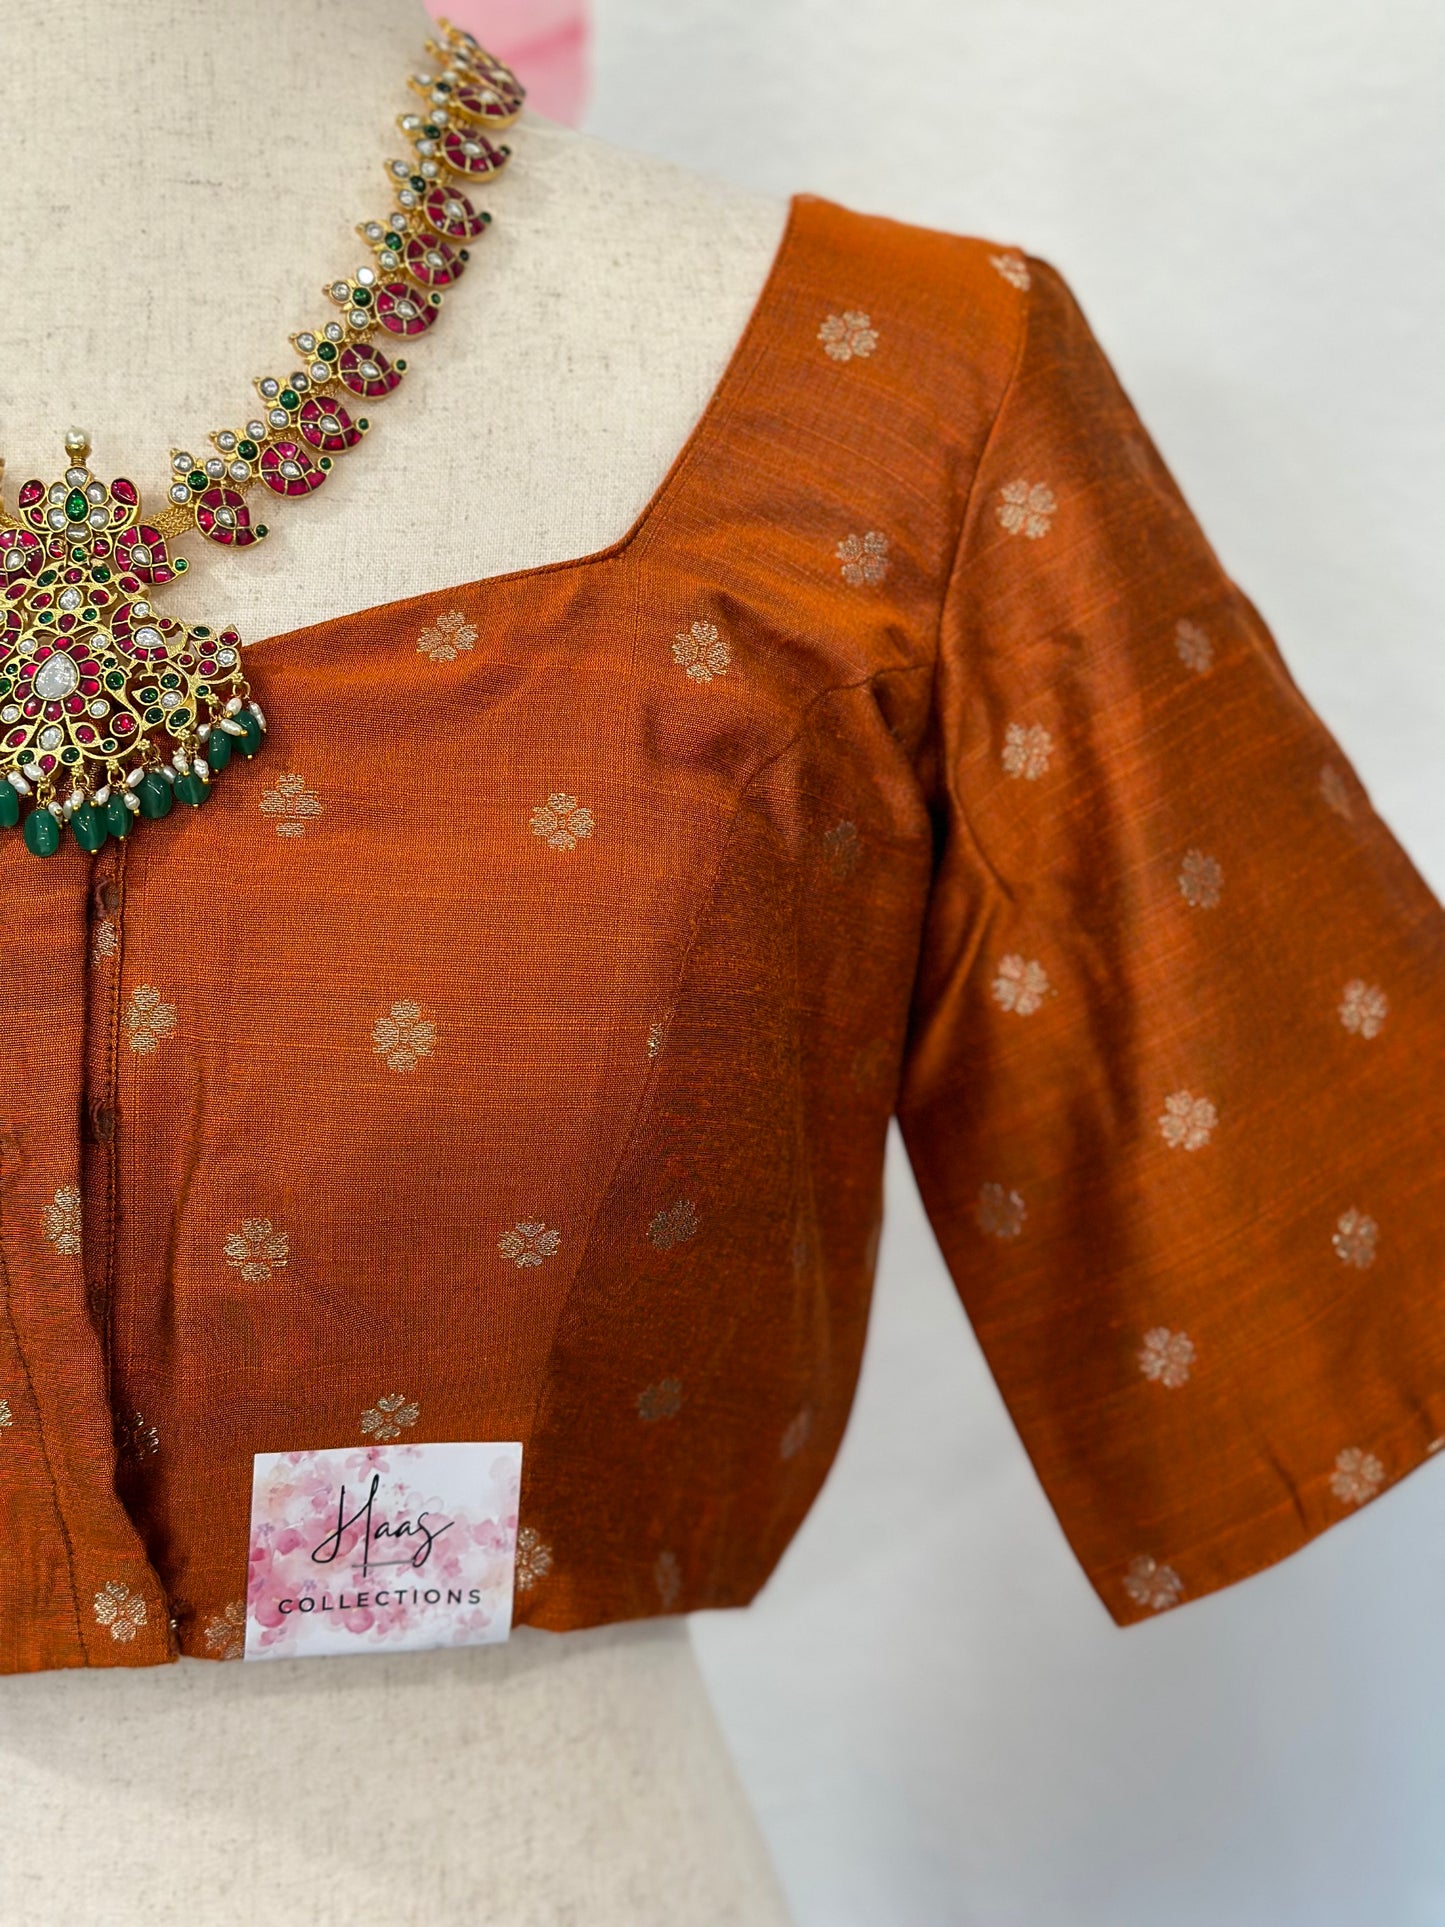 Buti blouse | Saree blouses in USA